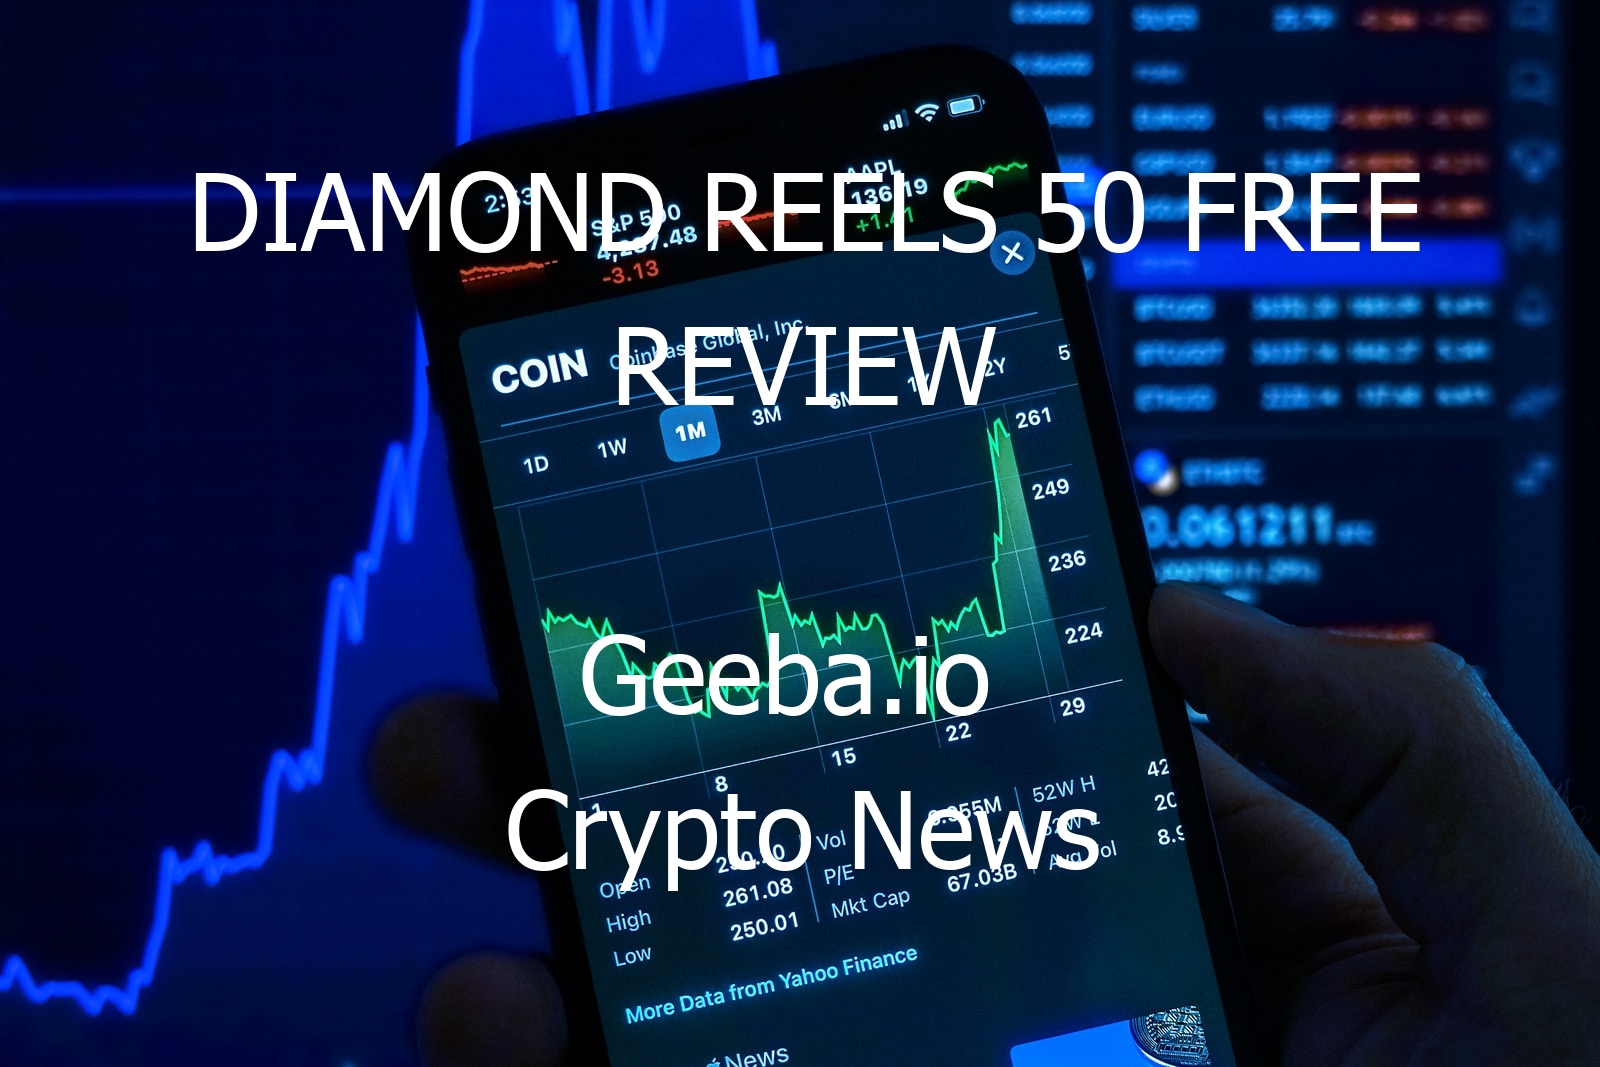 diamond reels 50 free review 8010